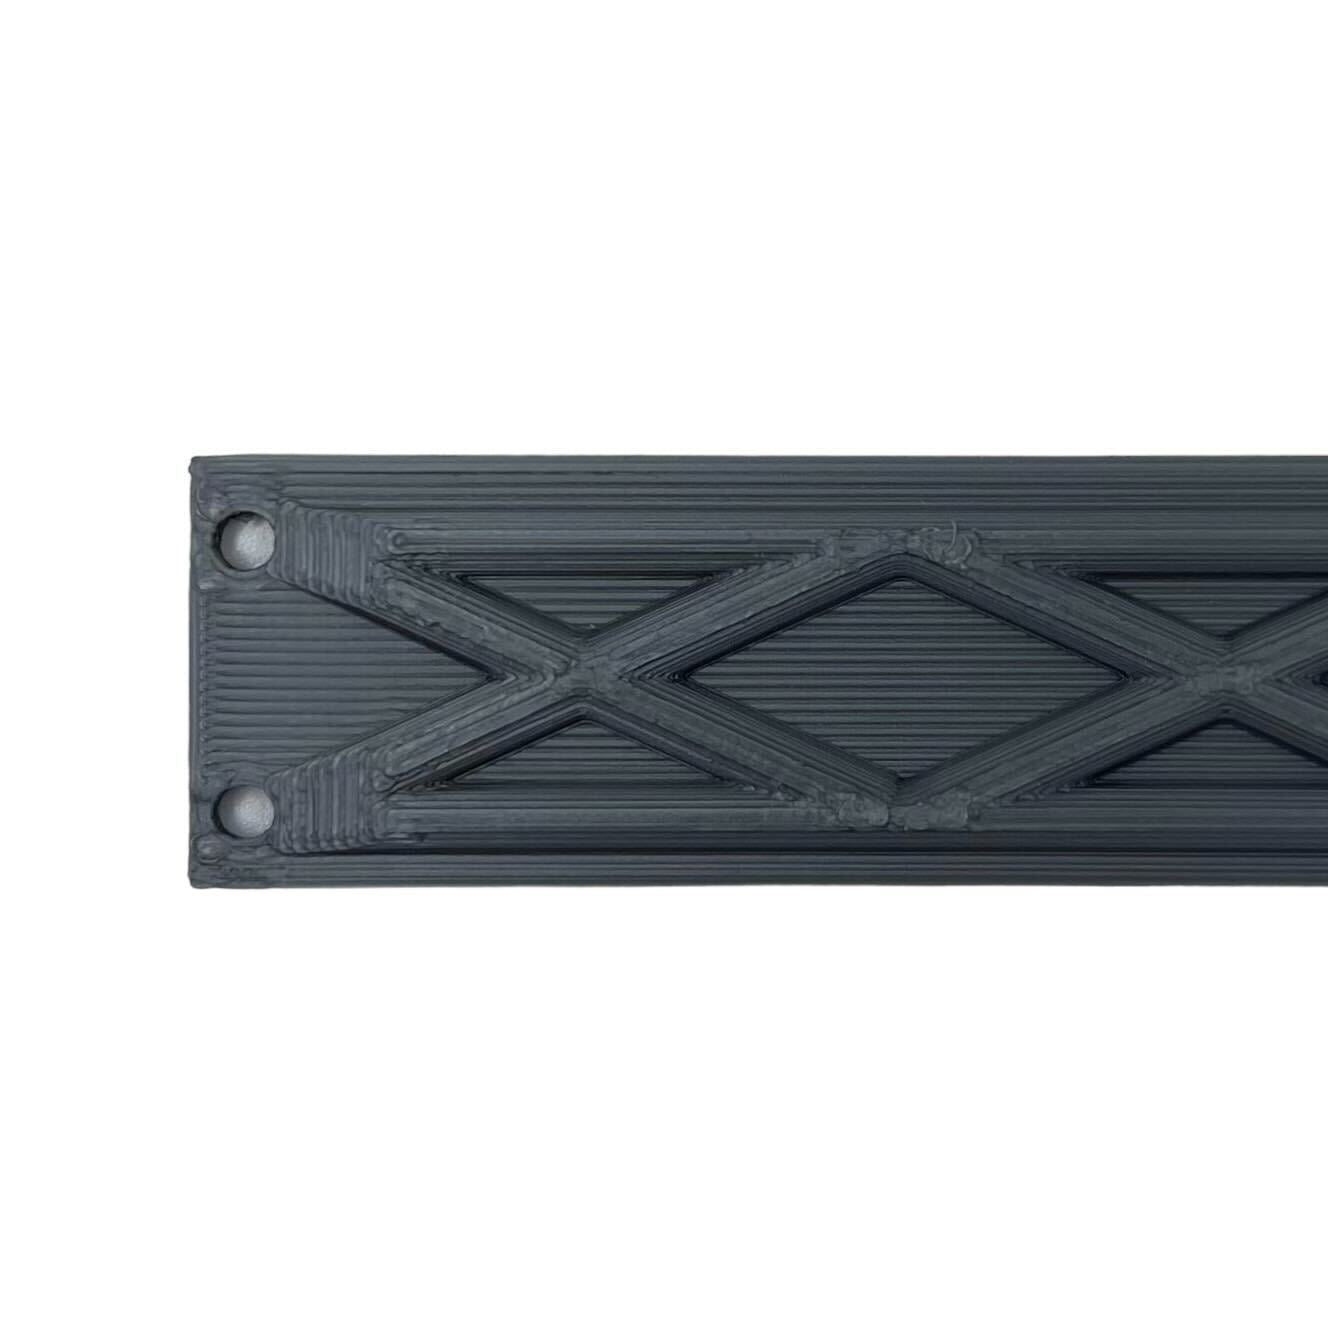 Top Deck Stiffener Brace Bar for Tamiya TT02 1/10 4wd Touring Car Upgrade